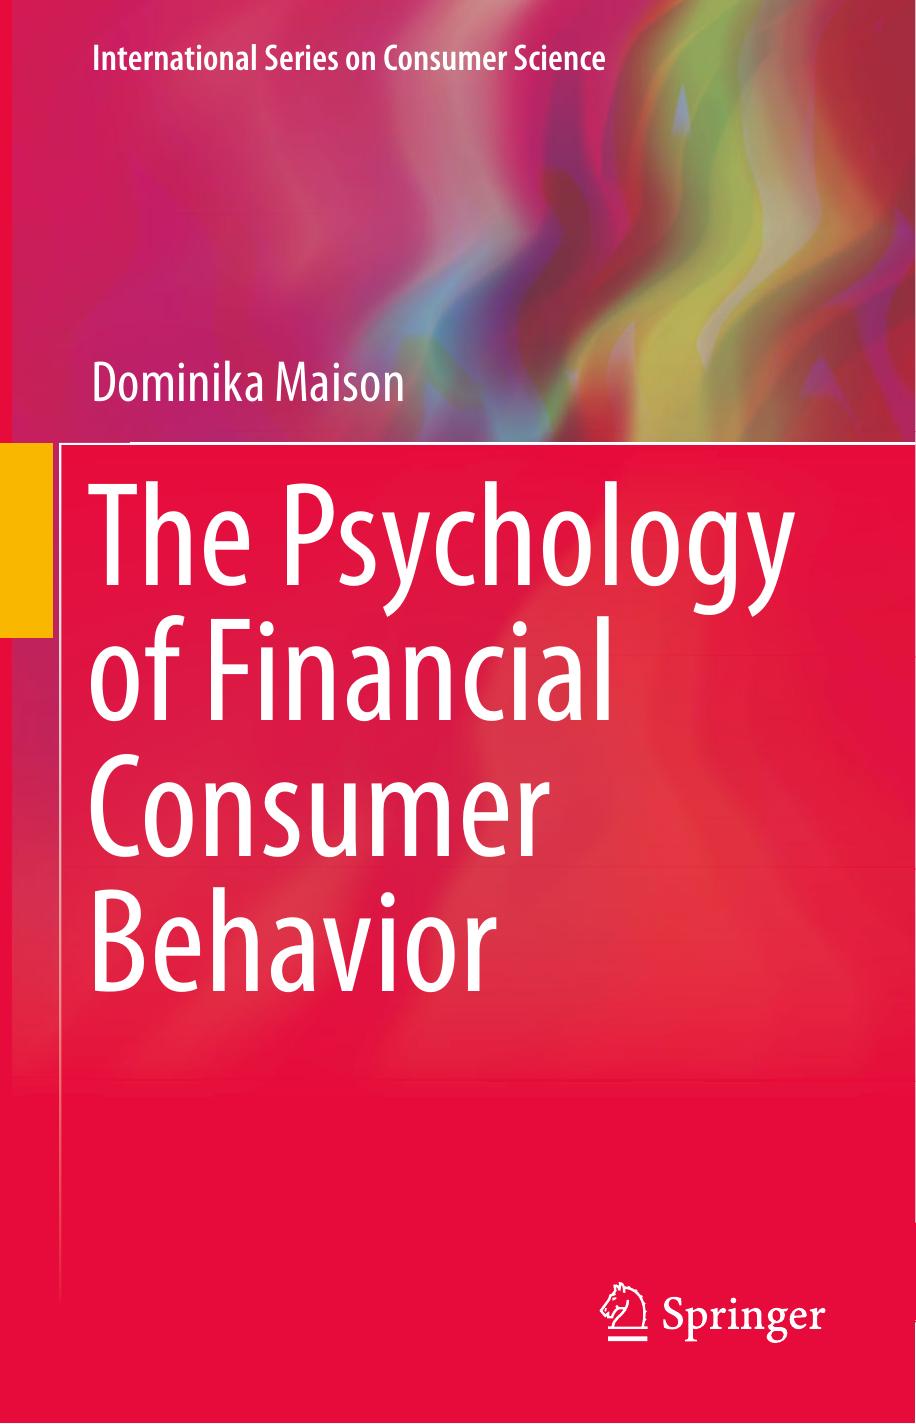 The Psychology of Financial Consumer Behavior 2019